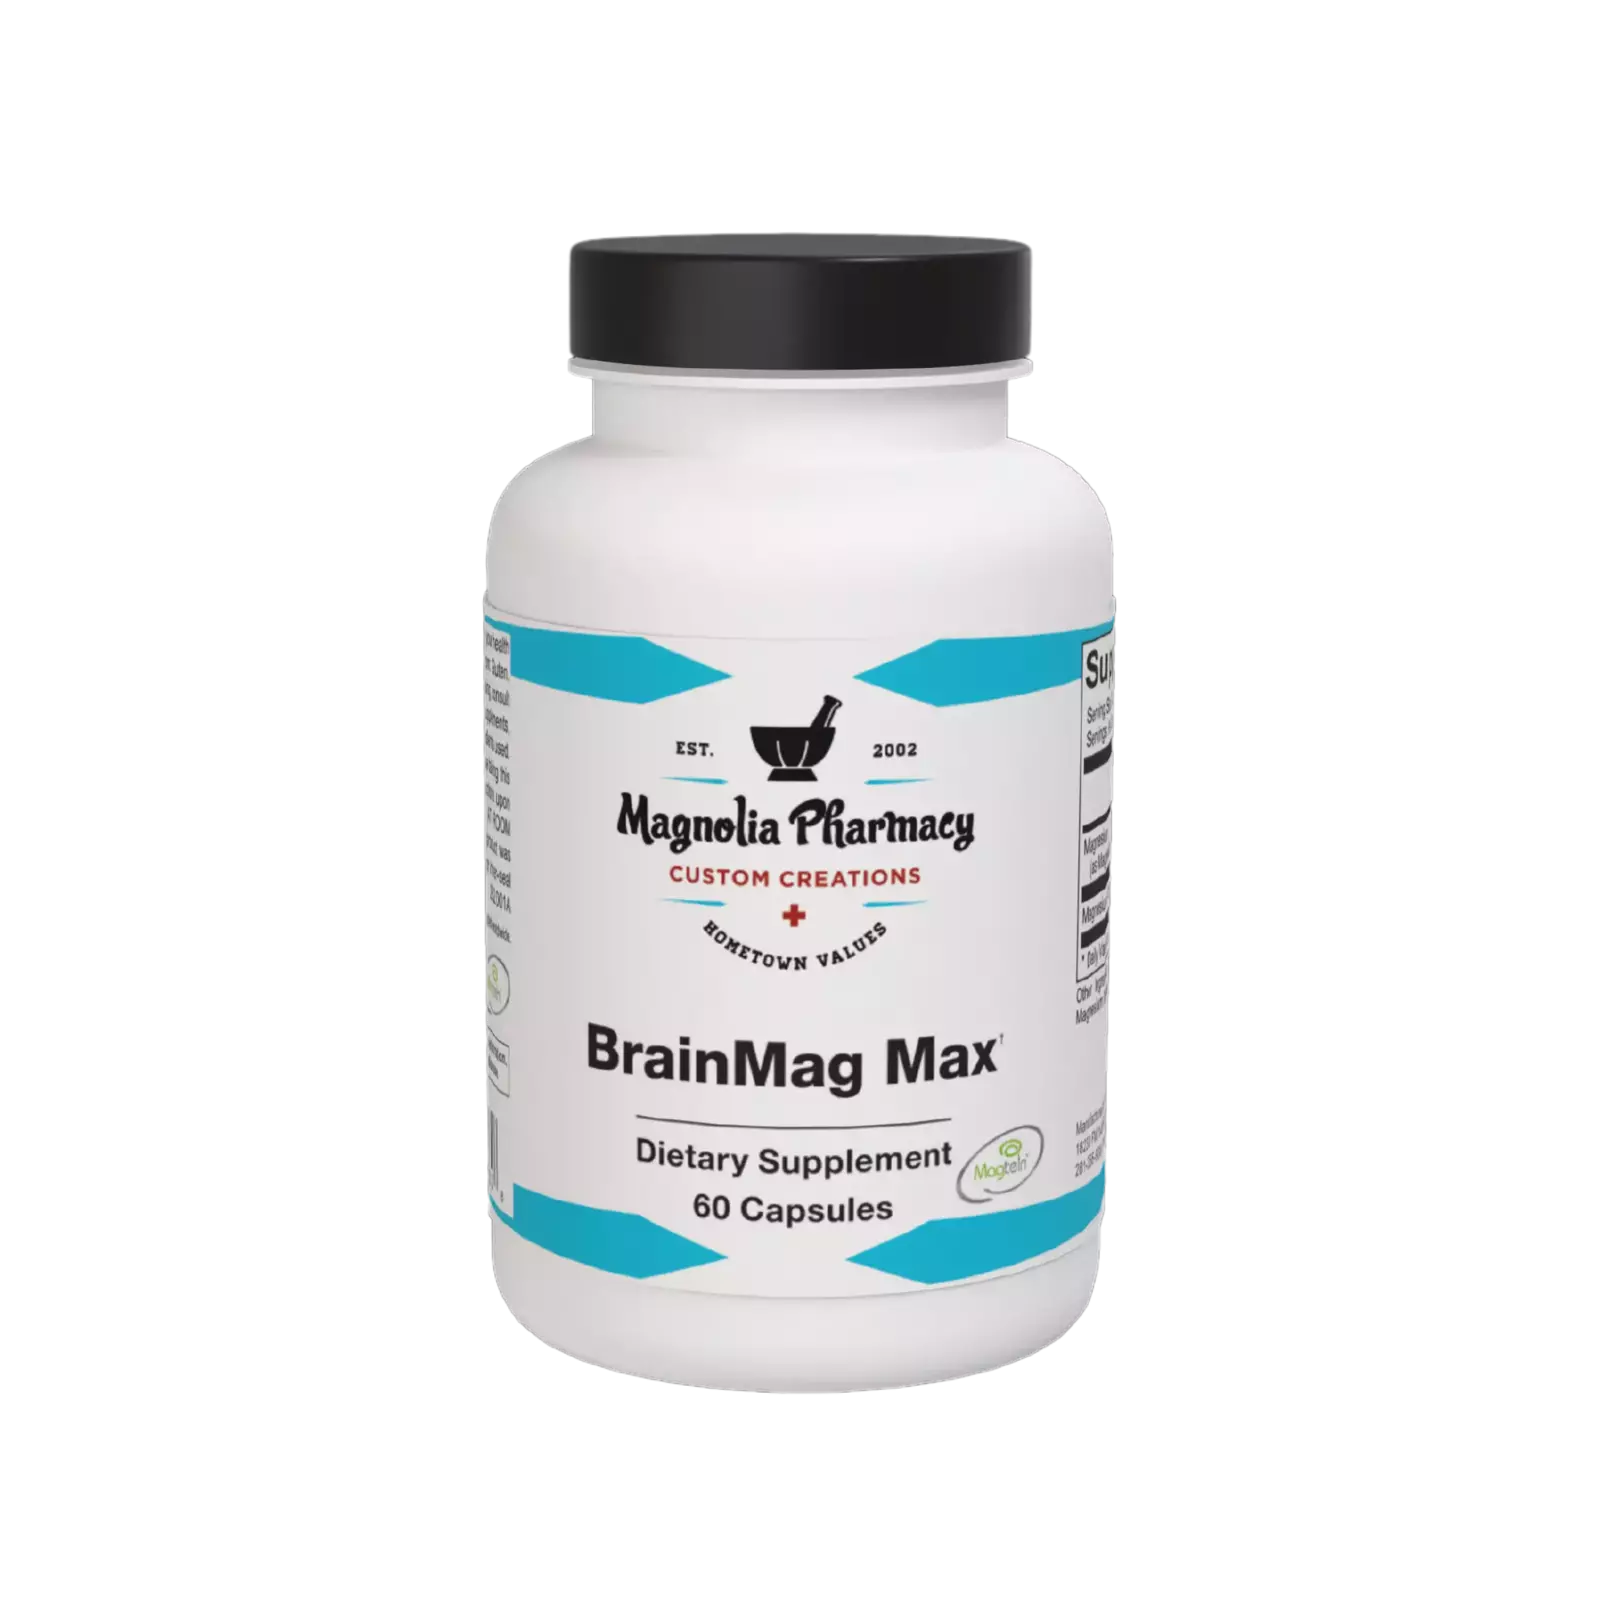 BrainMag Max